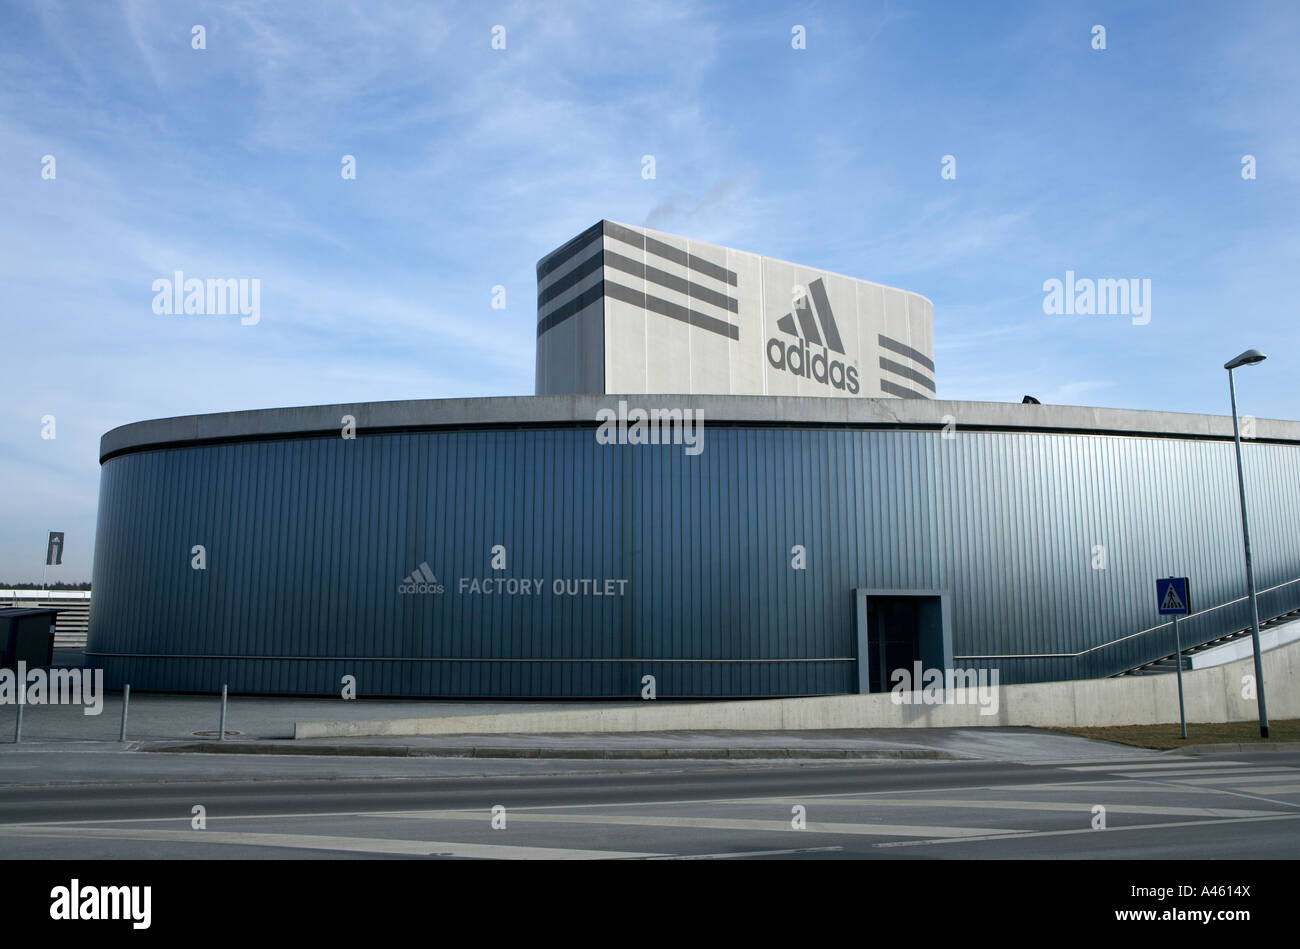 Adidas Factory Outlet Center Stockfotografie - Alamy